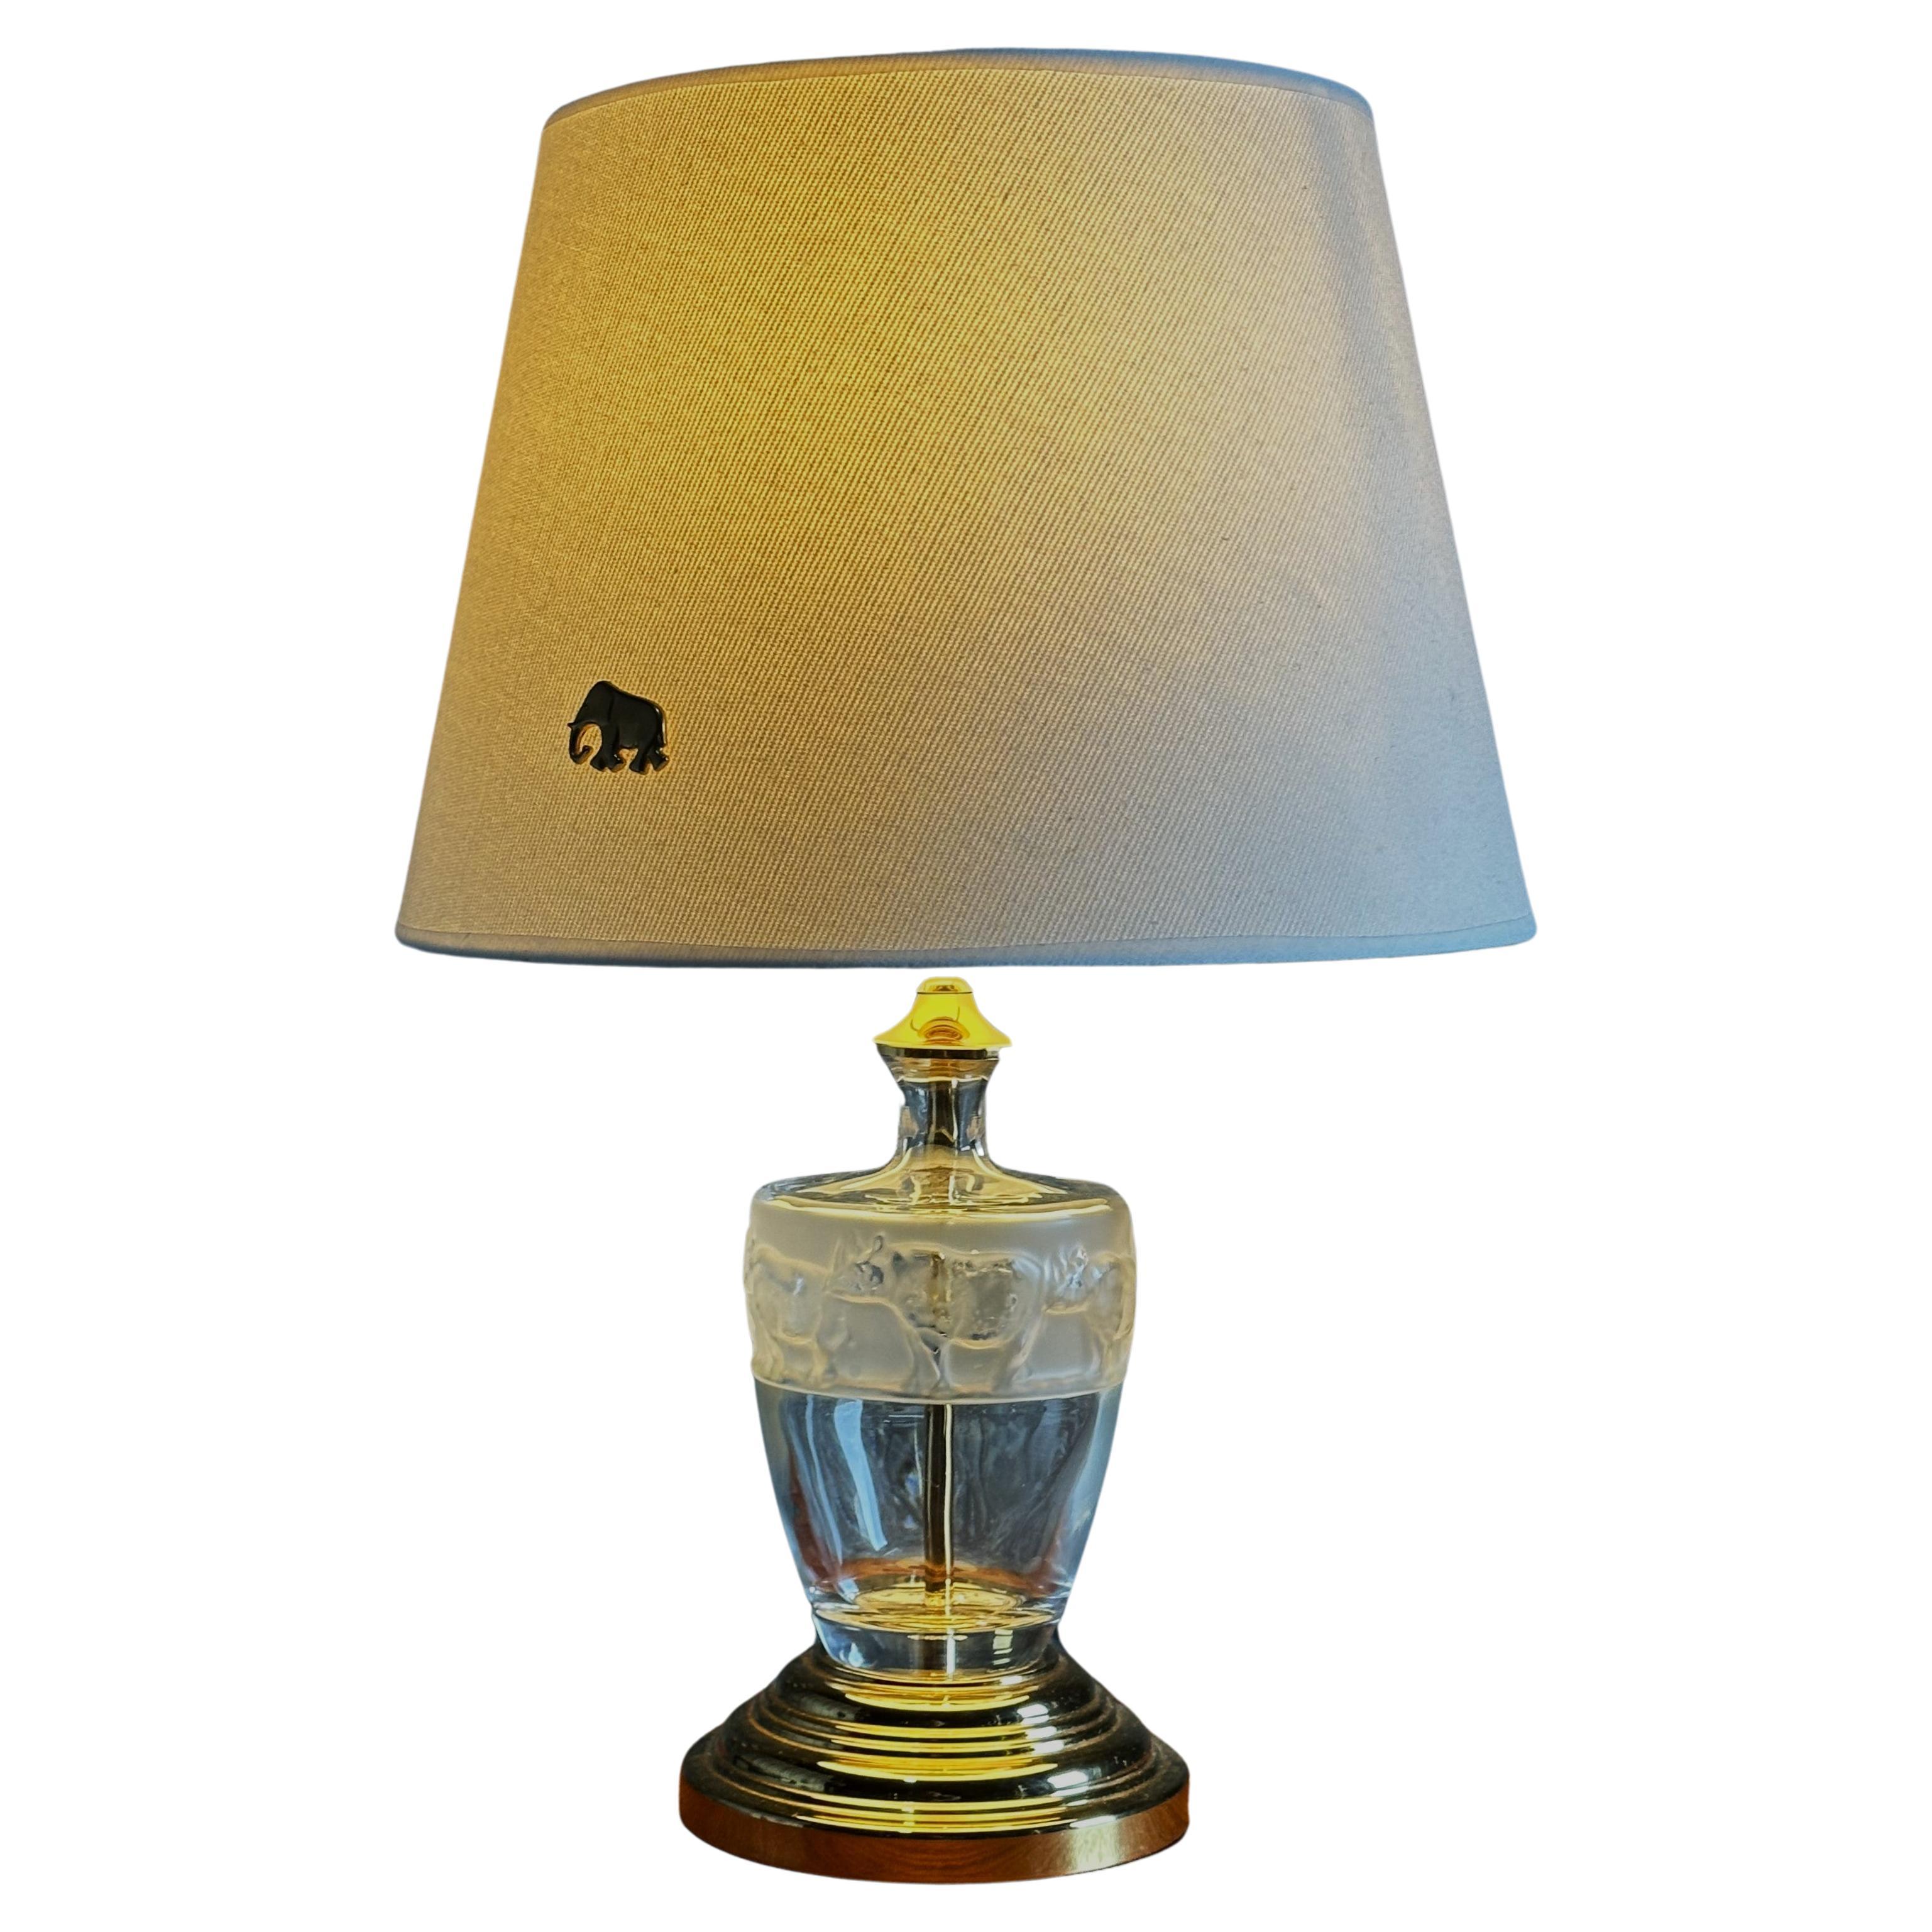 Murano Table Lamp, Africa Rhino Design, Brass and Glass. Italy 1960s